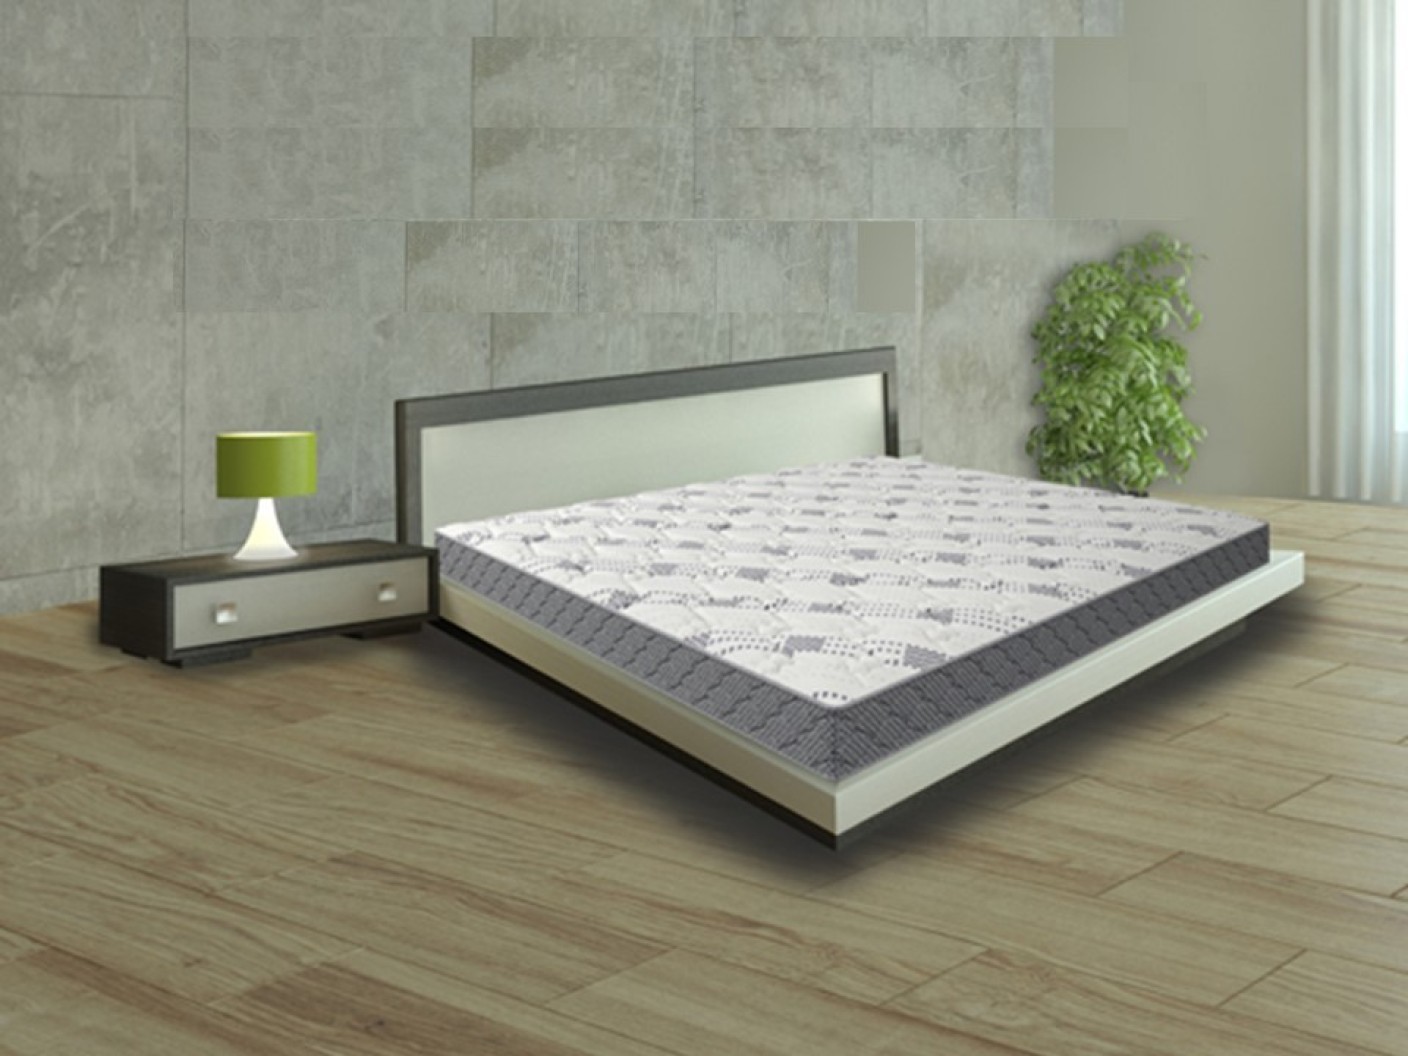 sleepwell pocket spring mattress price in india